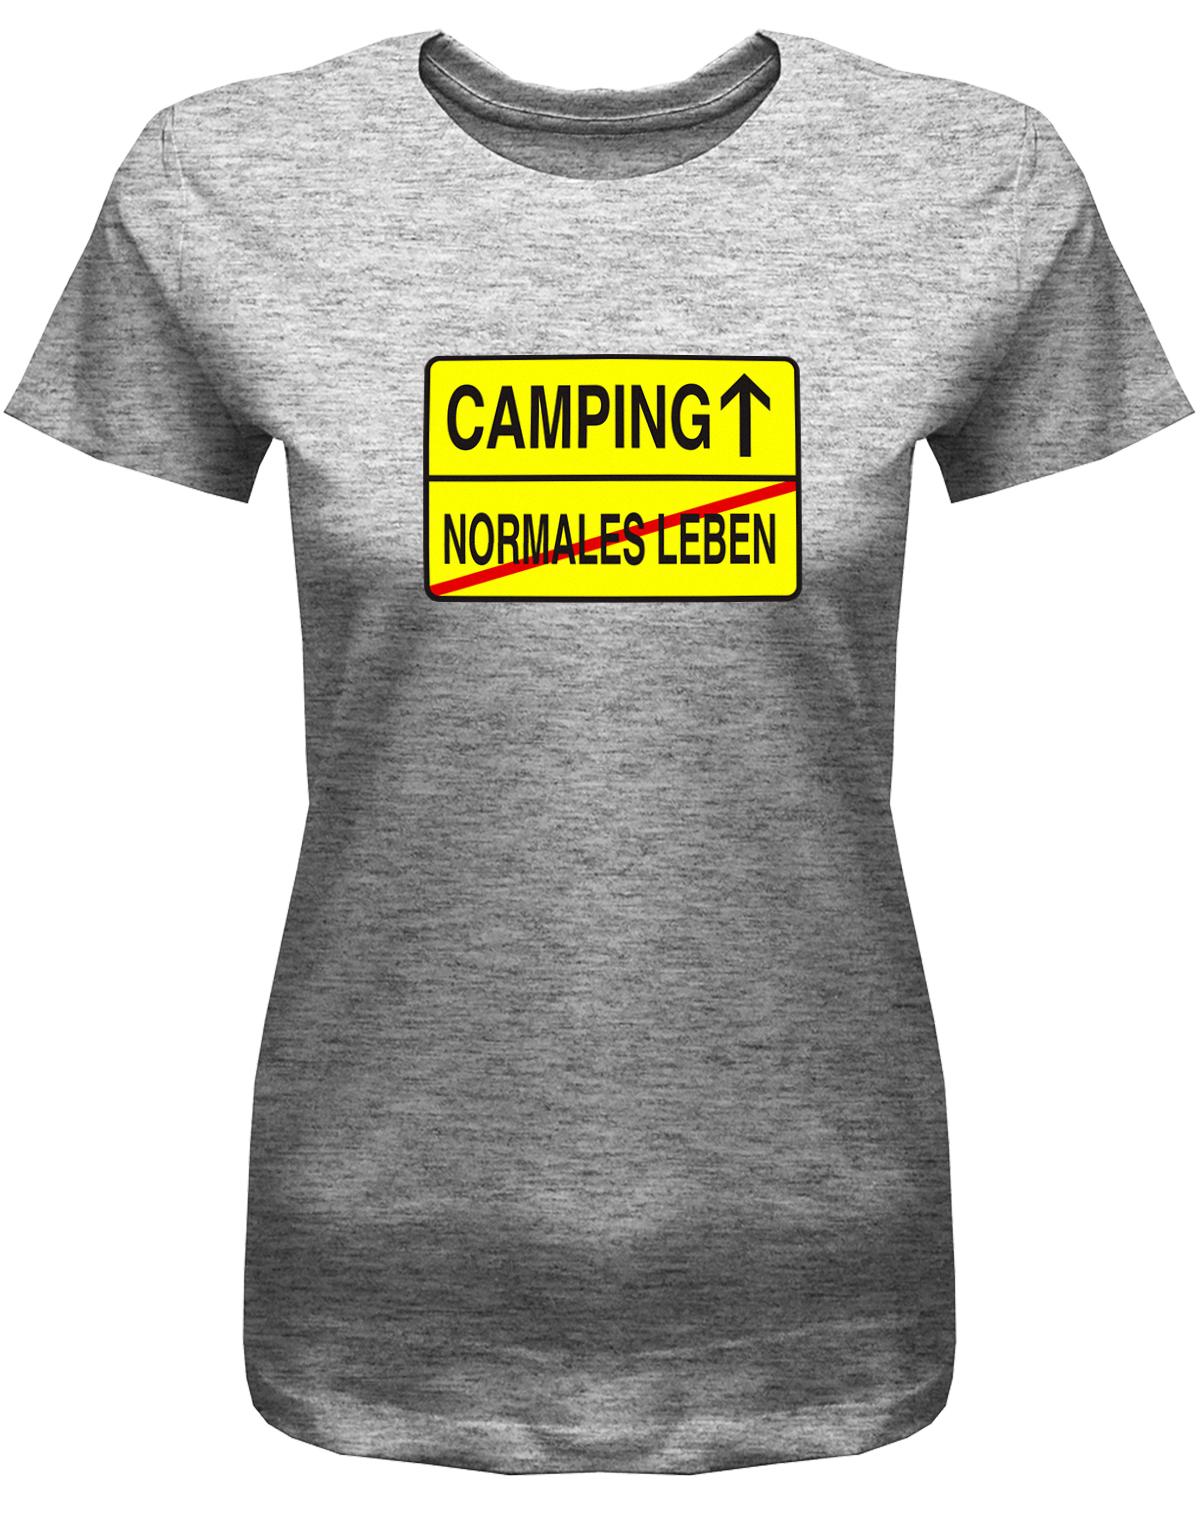 Camping-Normales-leben-Ortschild-Damen-Camping-Shirt-grau